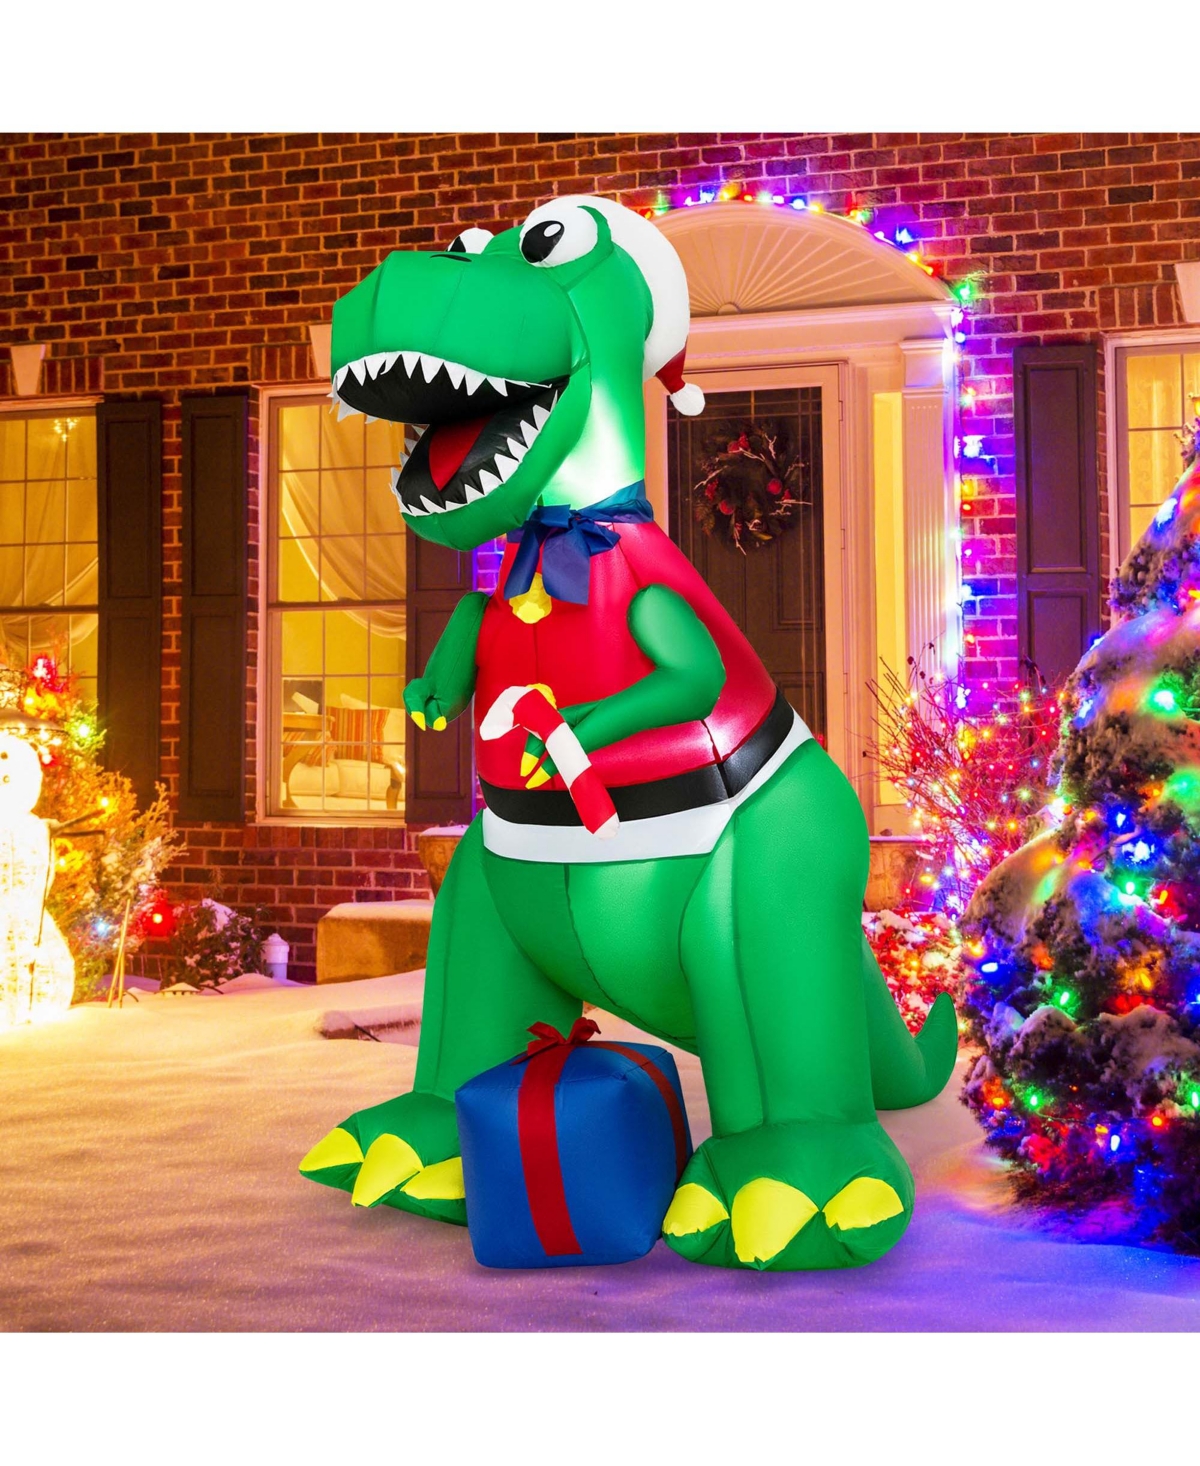 6FT Inflatable Christmas Dinosaur Dinosaur Decoration with Led Lights & Gift Box - Green